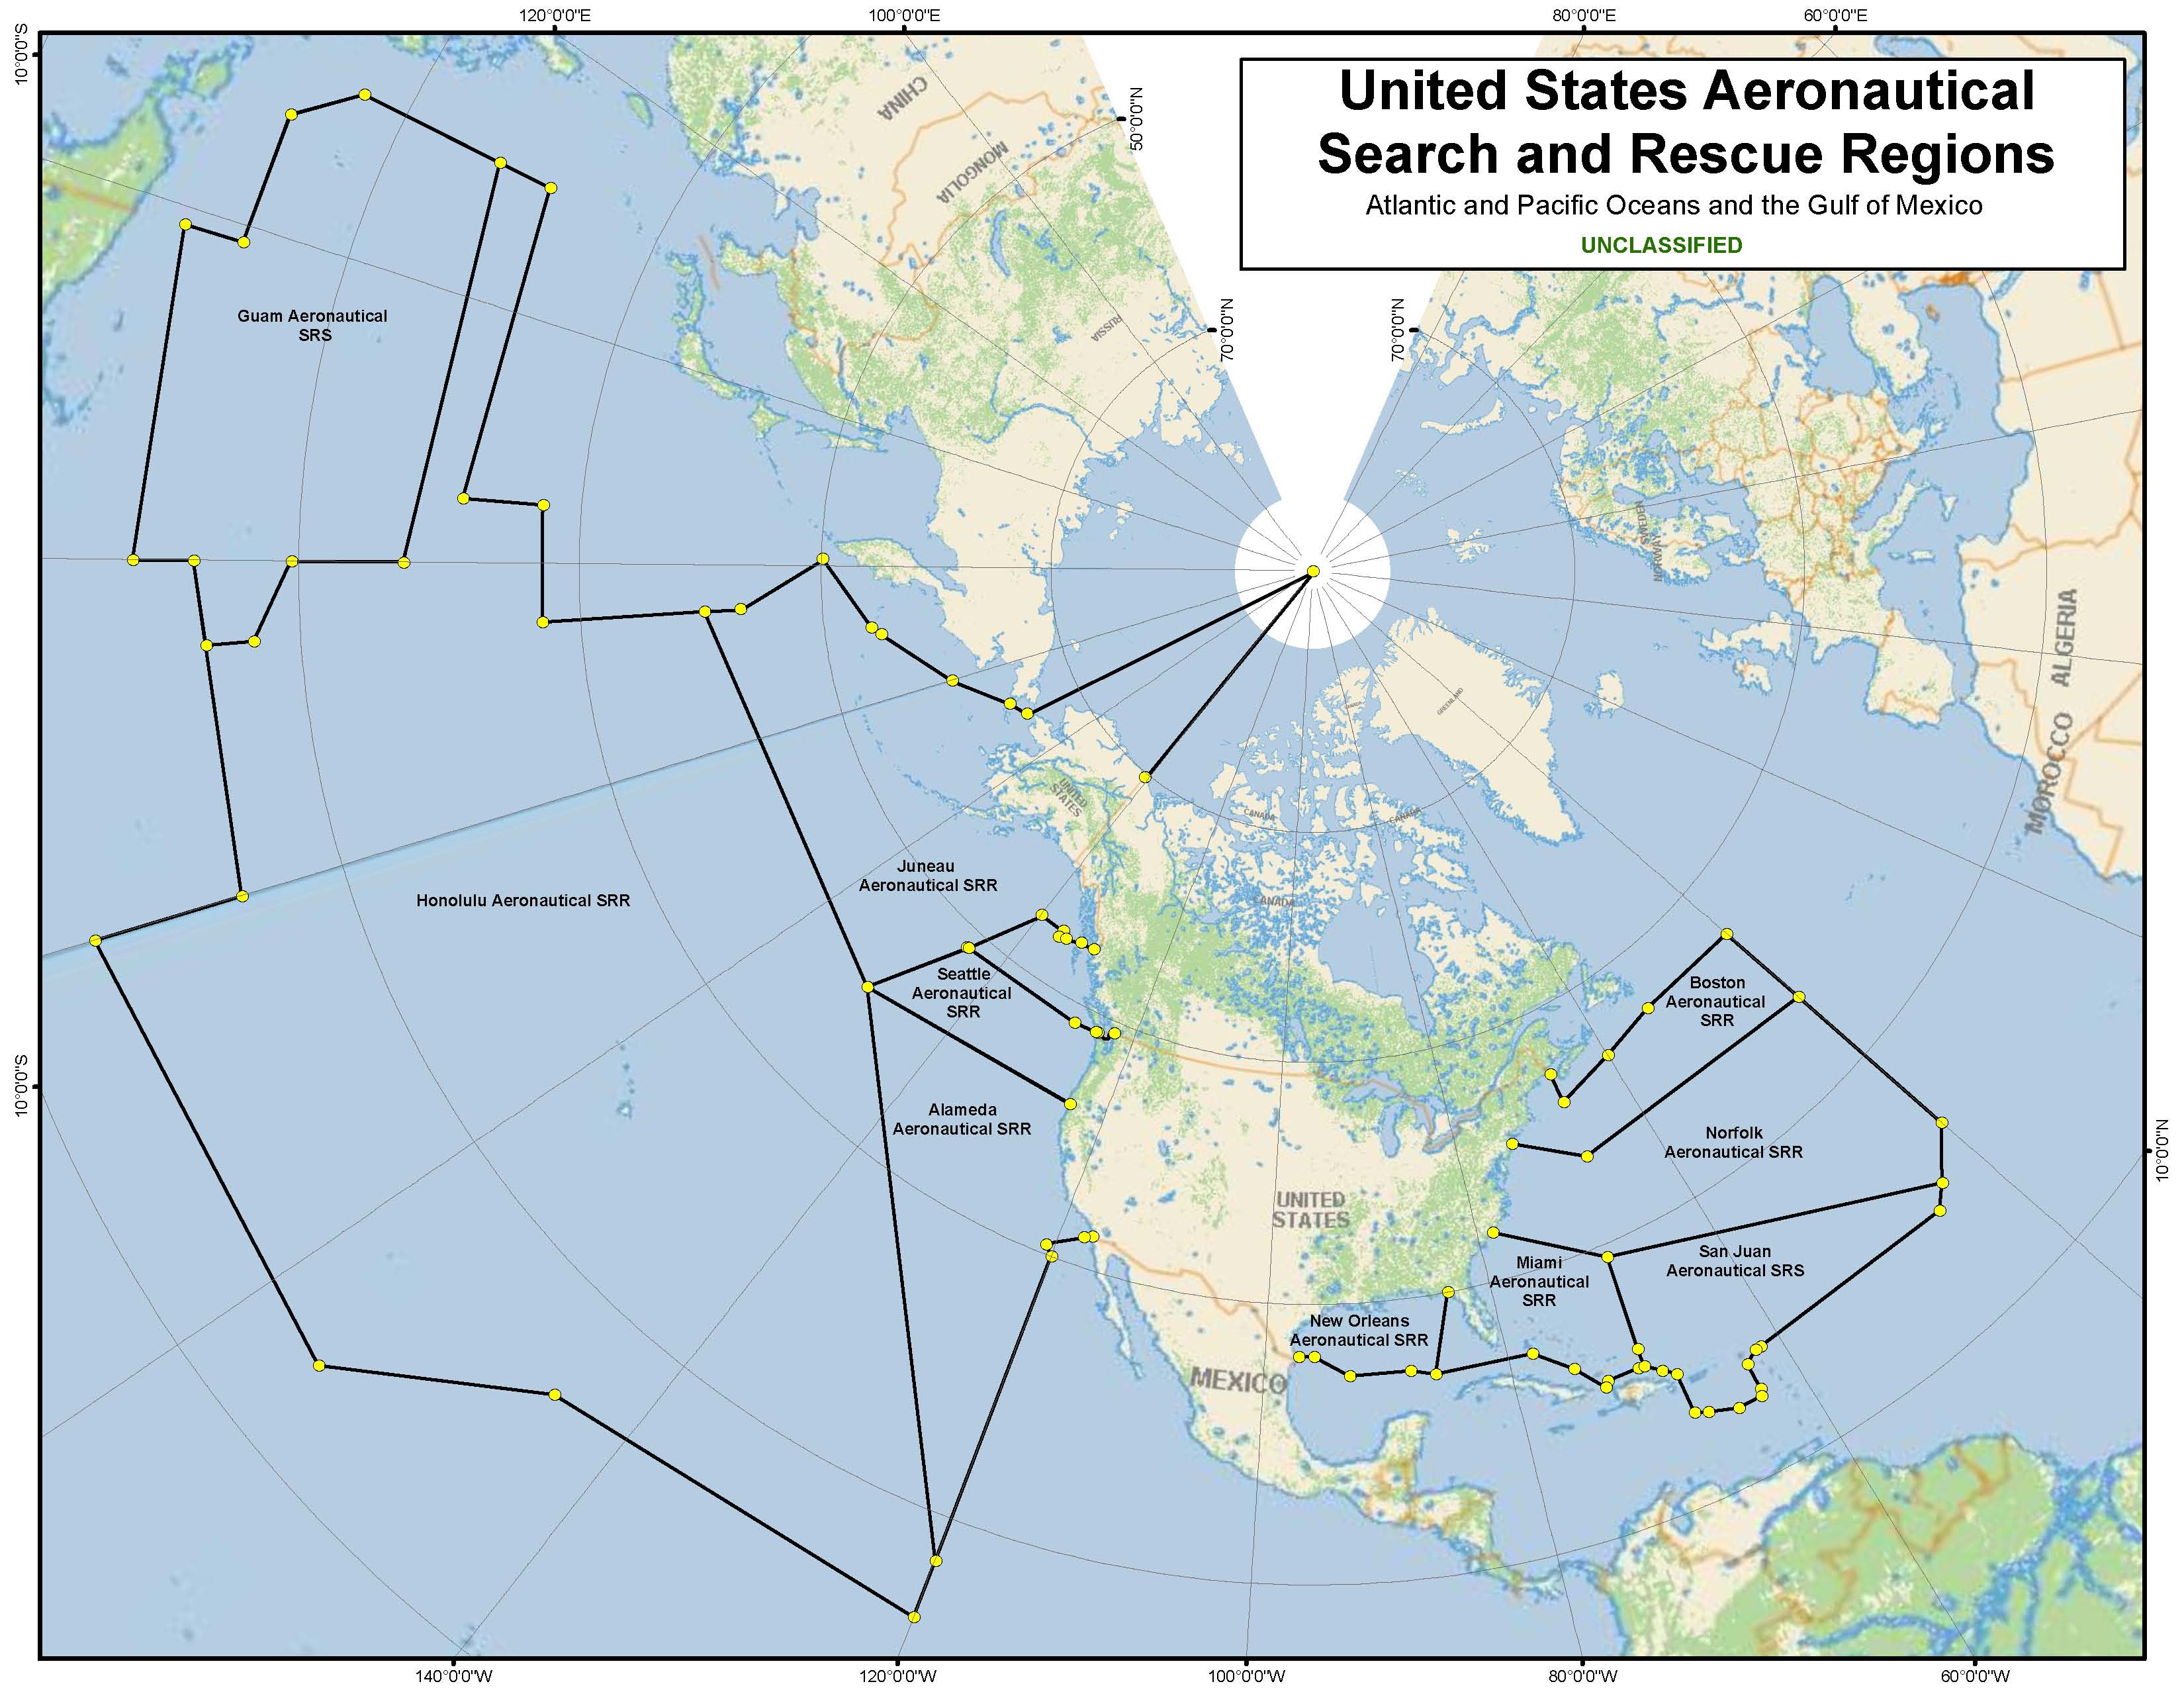 US Aeronautical SRR Overview